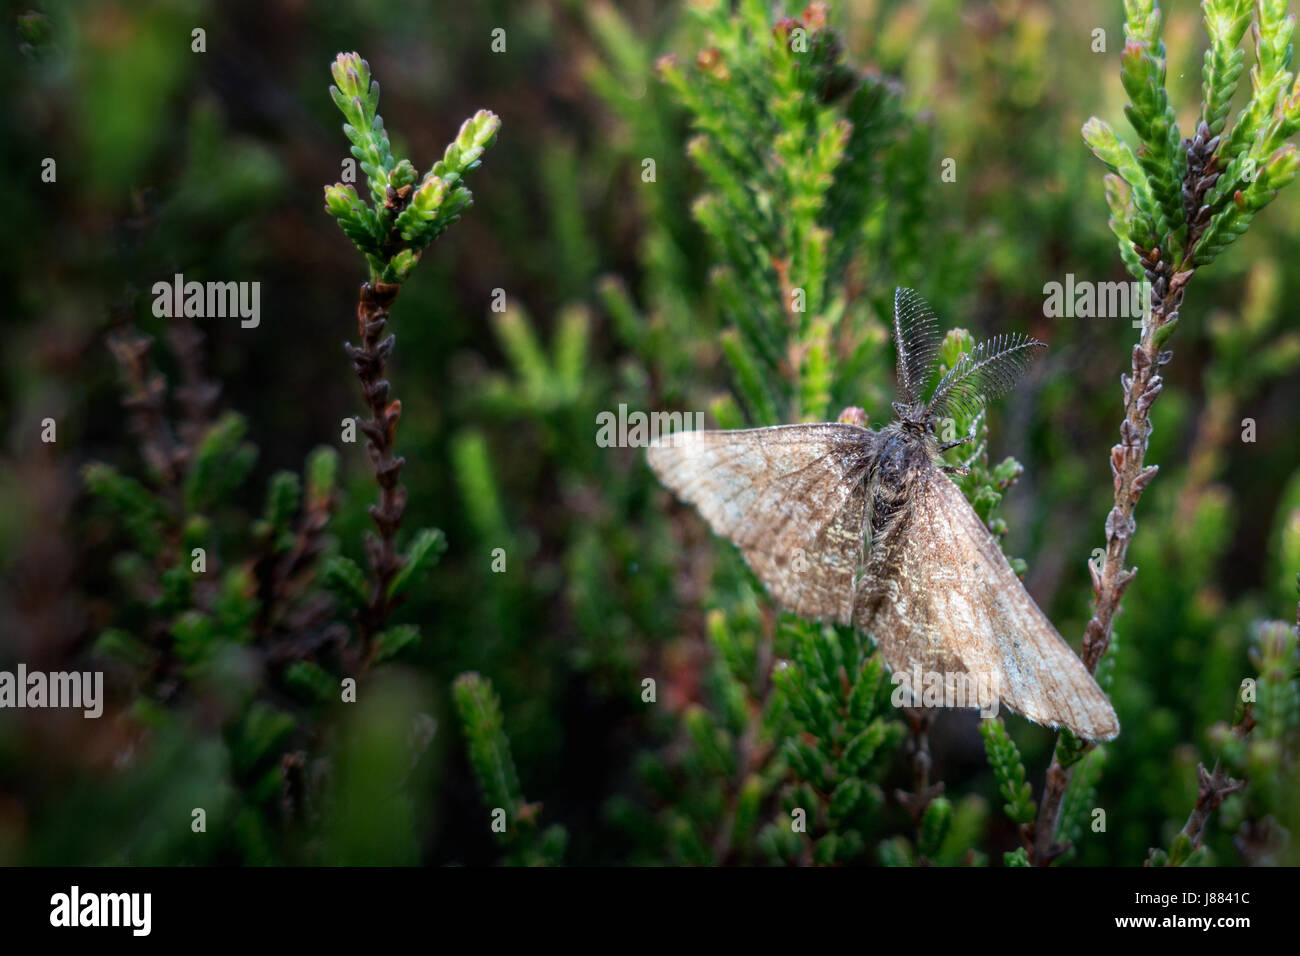 UK wildlife: Male common heath moth (ematurga atomaria) with bipectinate antennae, Ilkley Moor, Yorkshire, UK Stock Photo